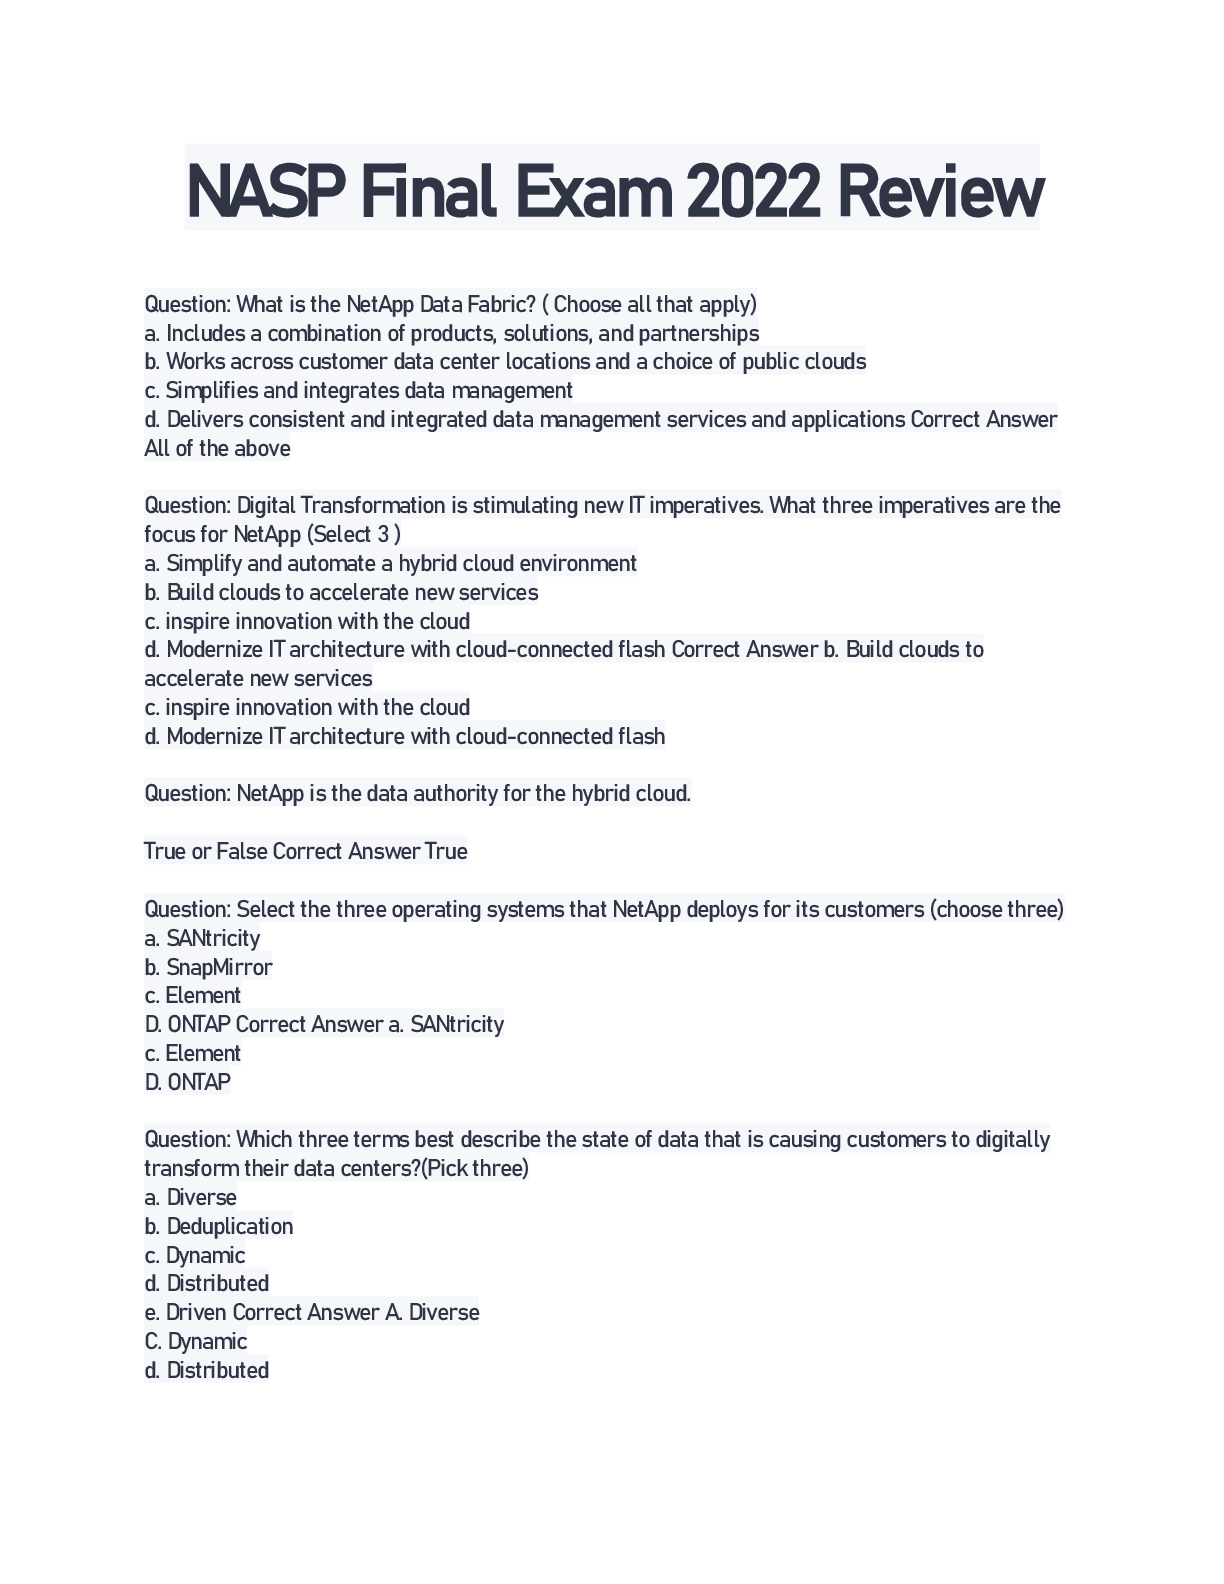 NASP Final Exam 2022 Review Browsegrades